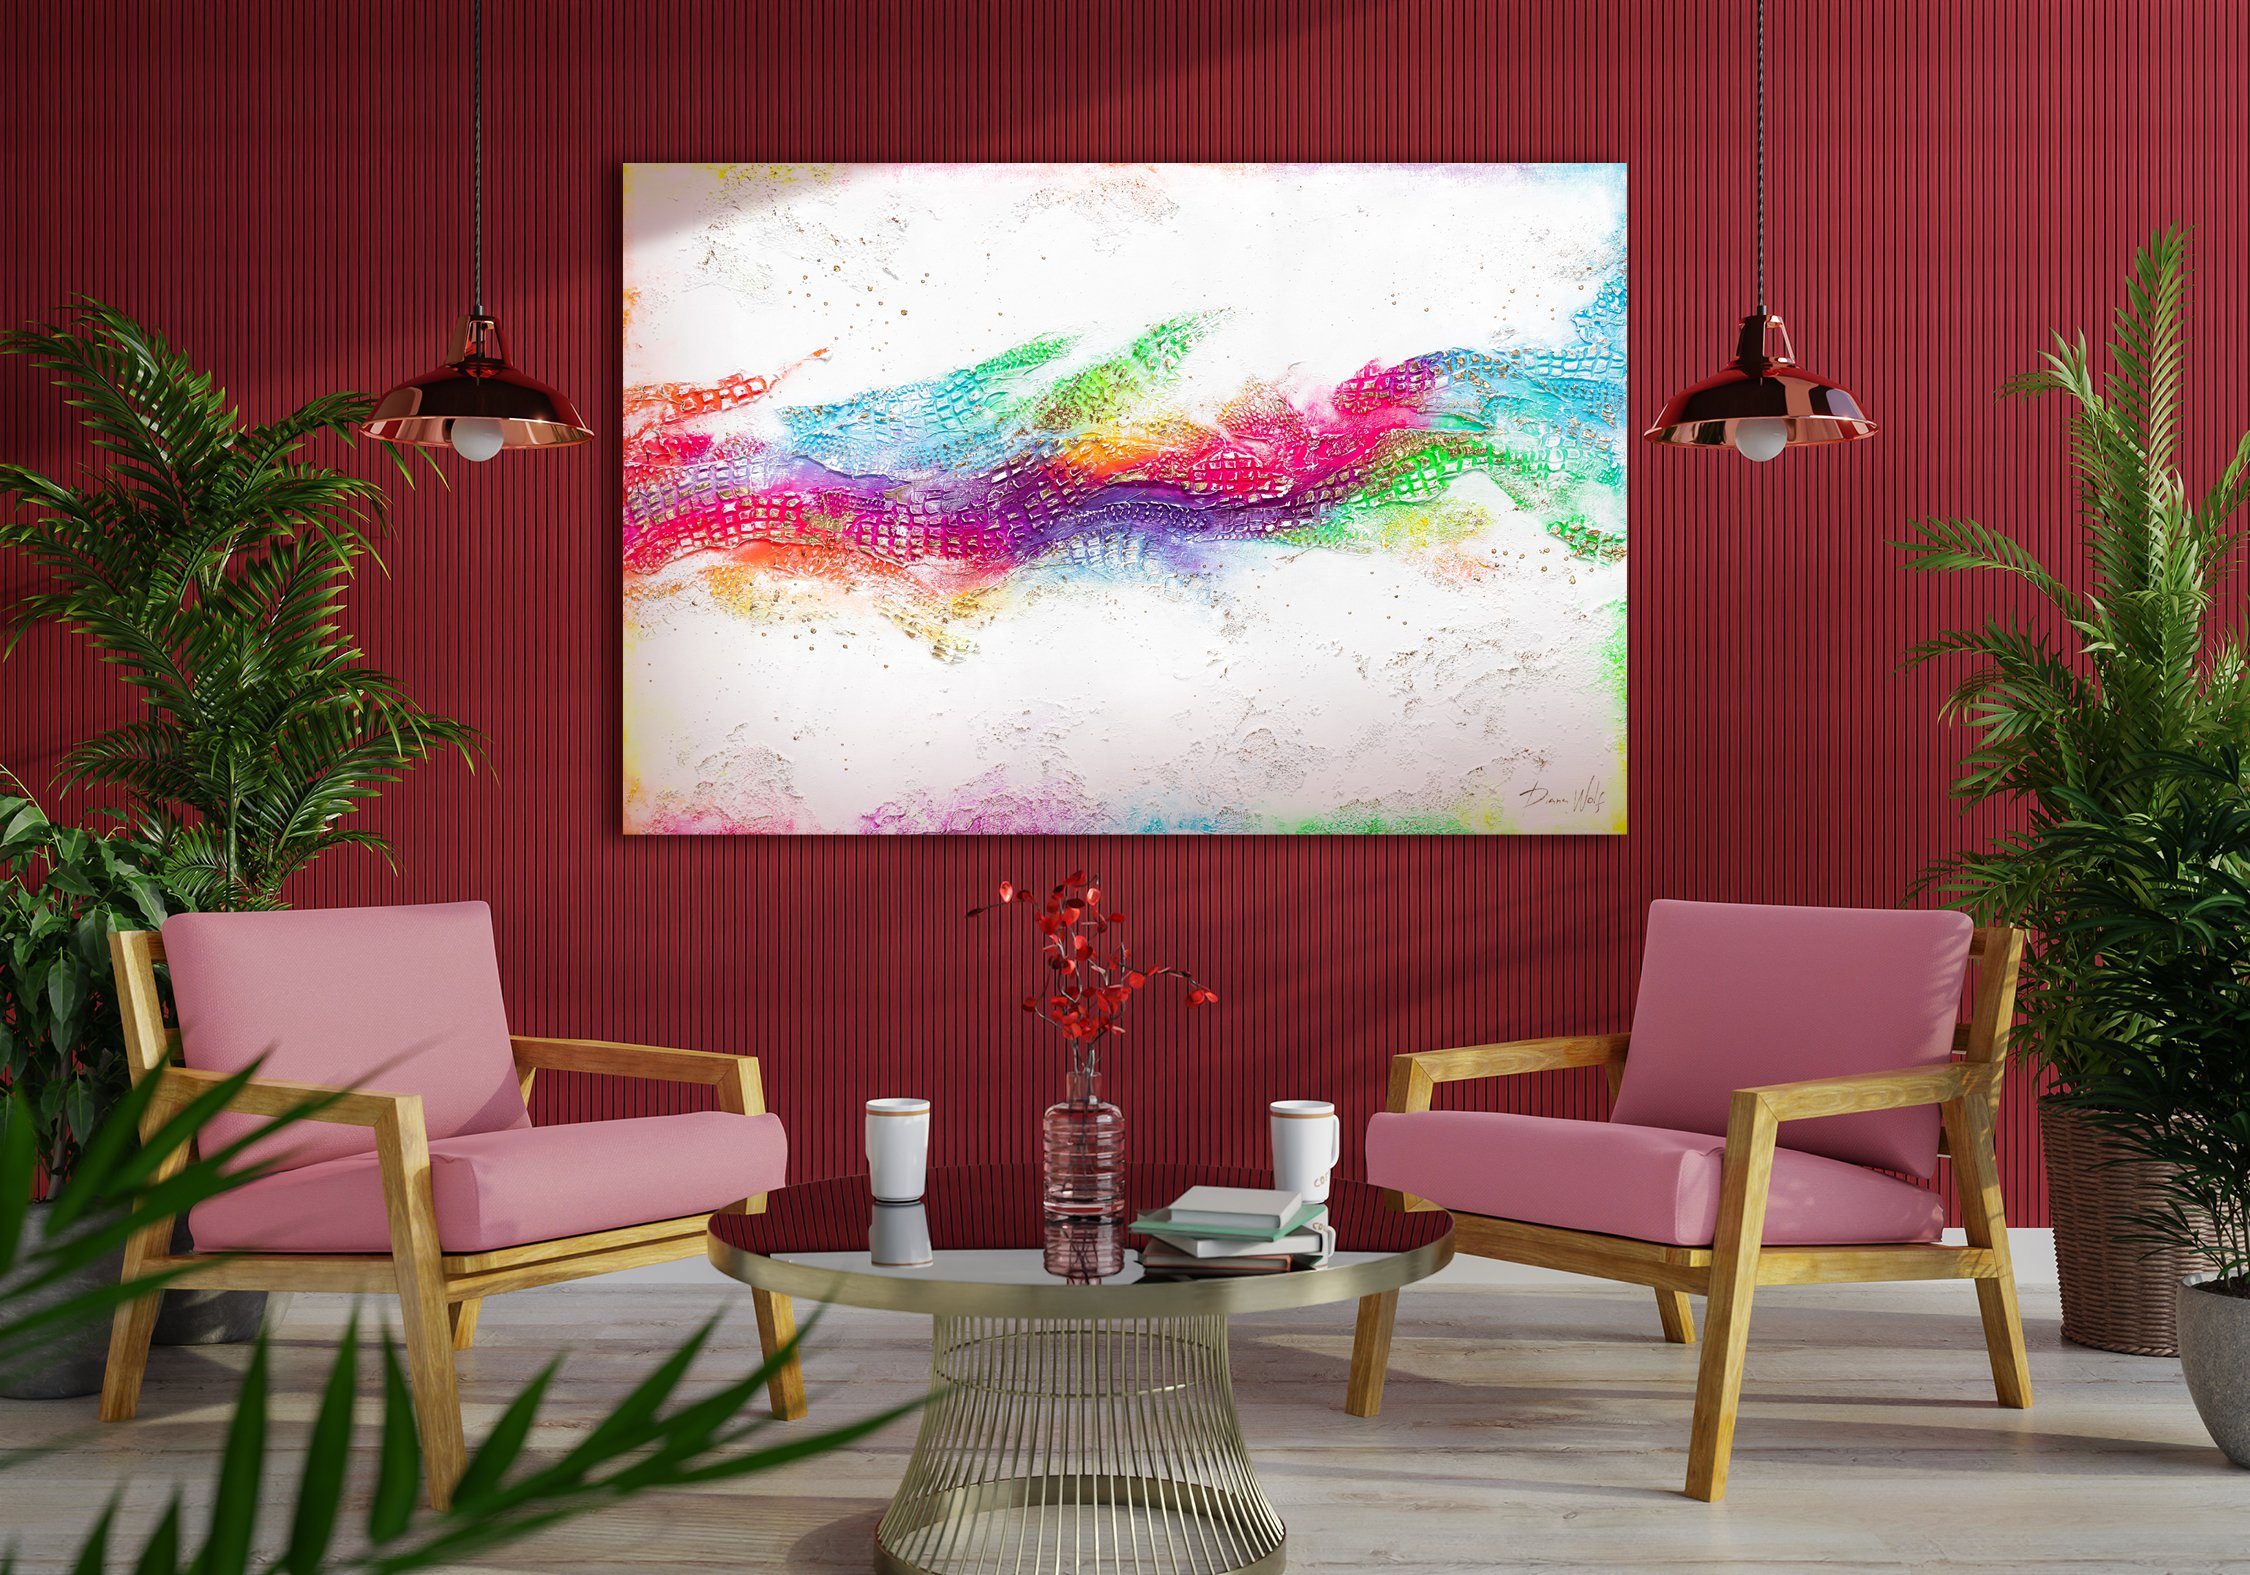 YS-Art Gemälde Farbenmusik, Abstrakt Abstraktion, Leinwand mit Handgemalt Struktur Bild Buntes